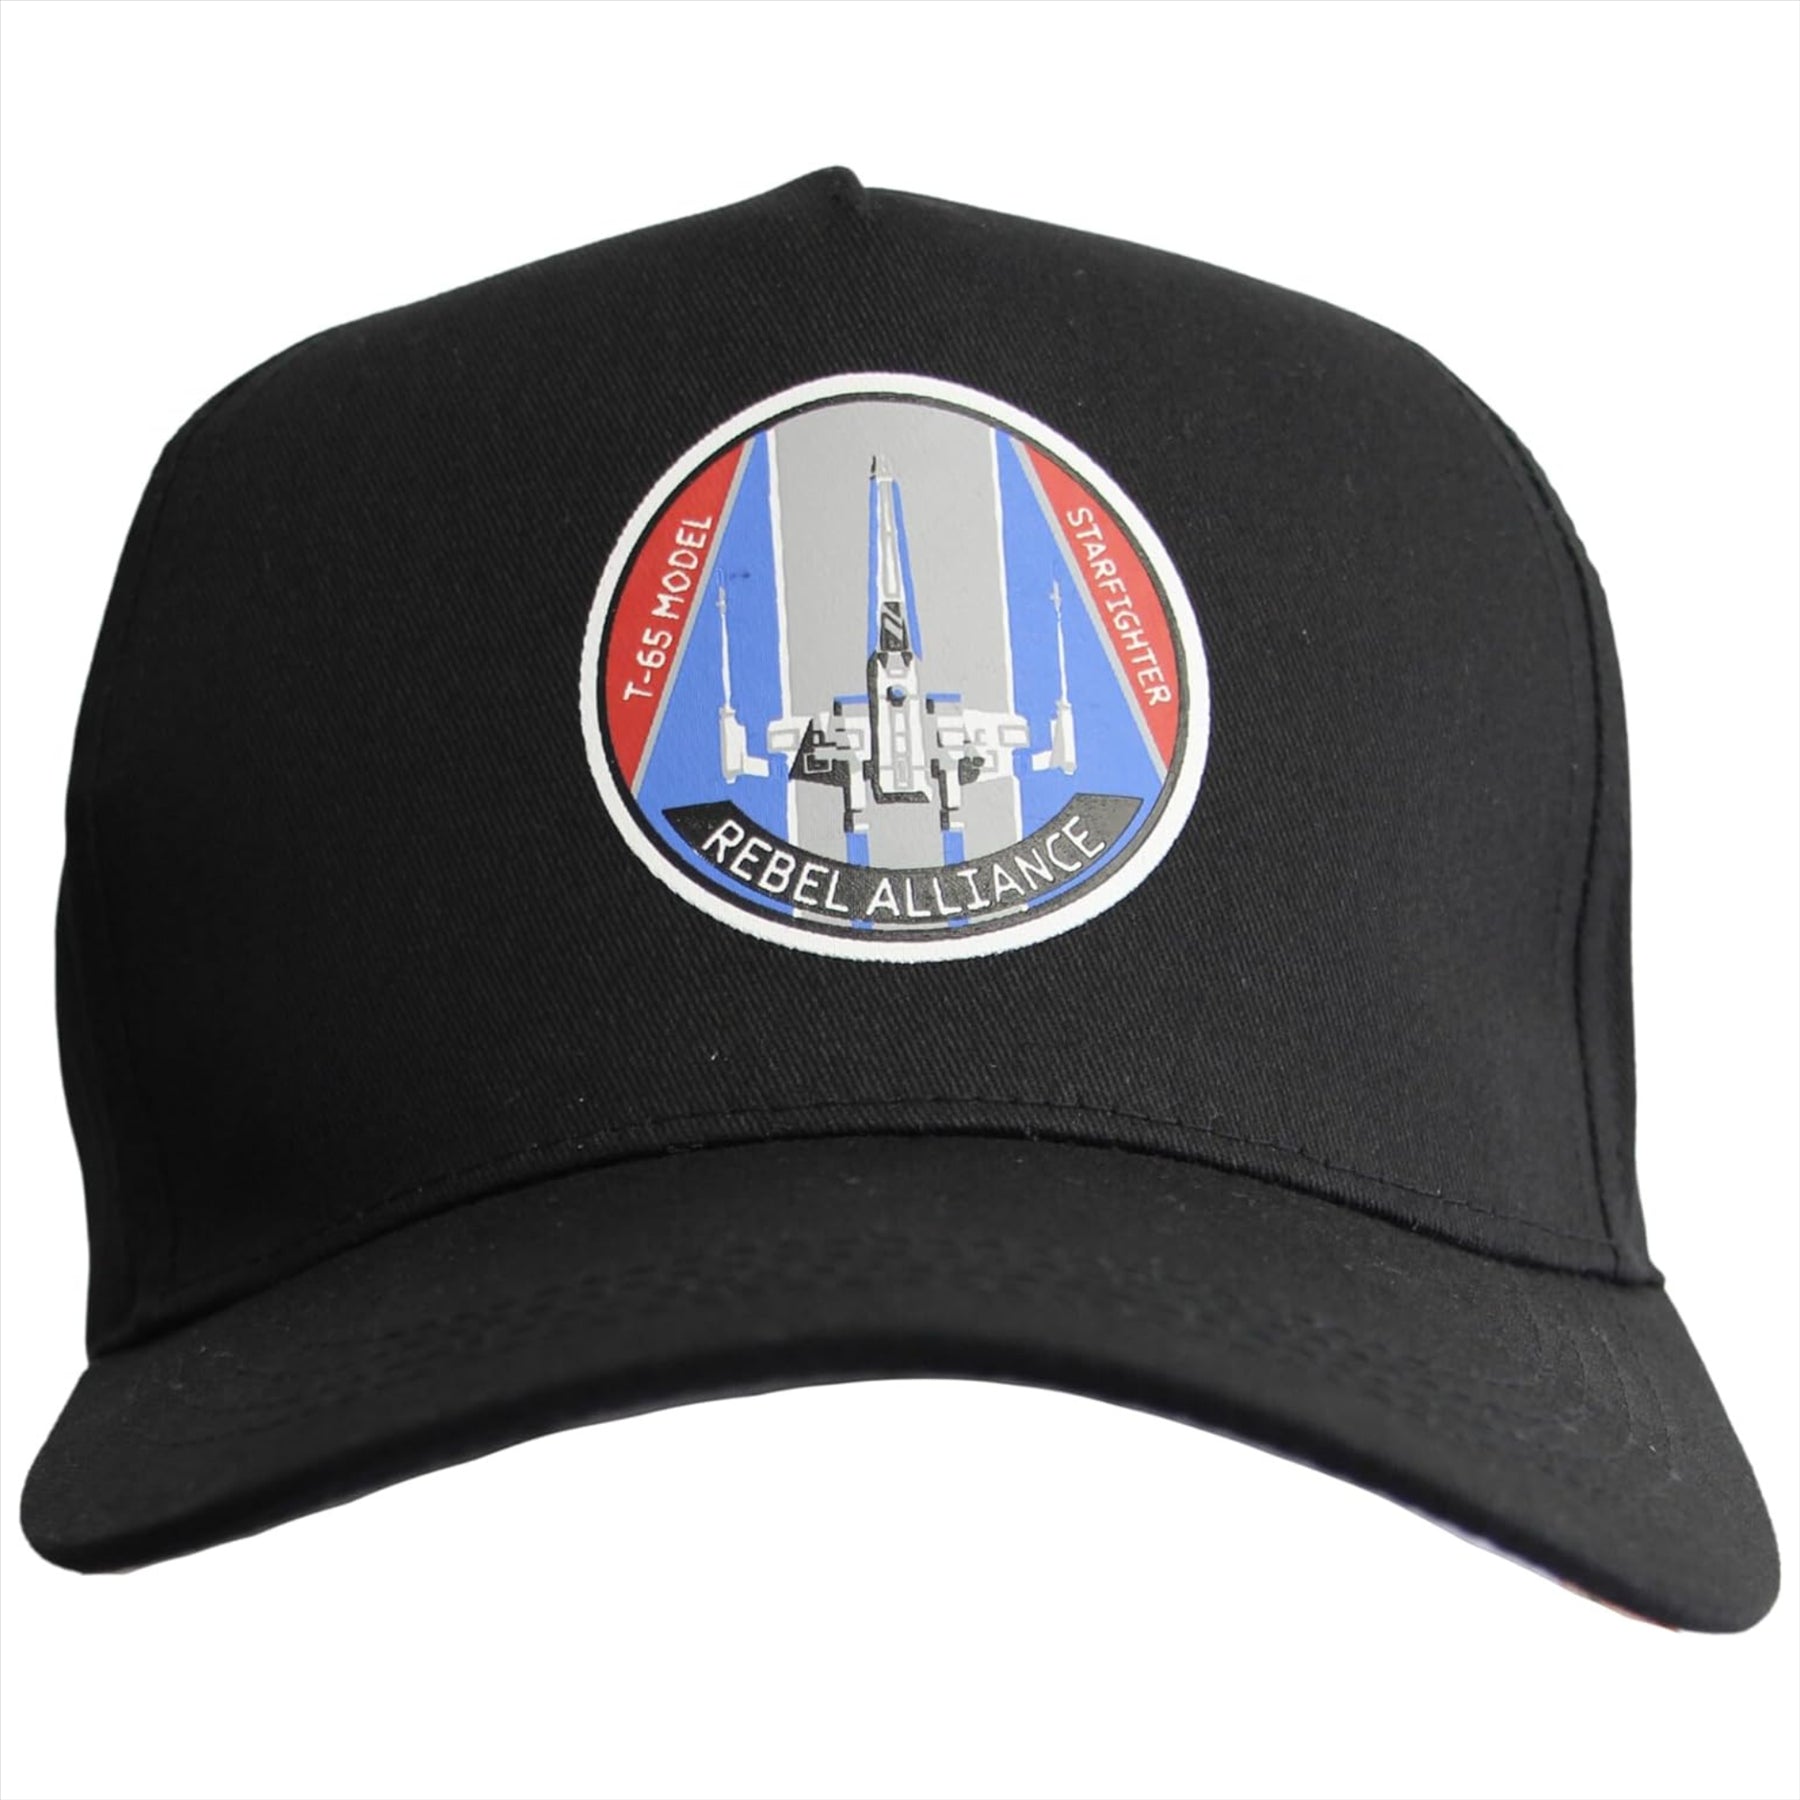 Star Wars Gift Set - Jedi Order T-Shirt (L), Rebel Alliance Baseball Cap, Far Far Away 350ml Ceramic Mug - Toptoys2u